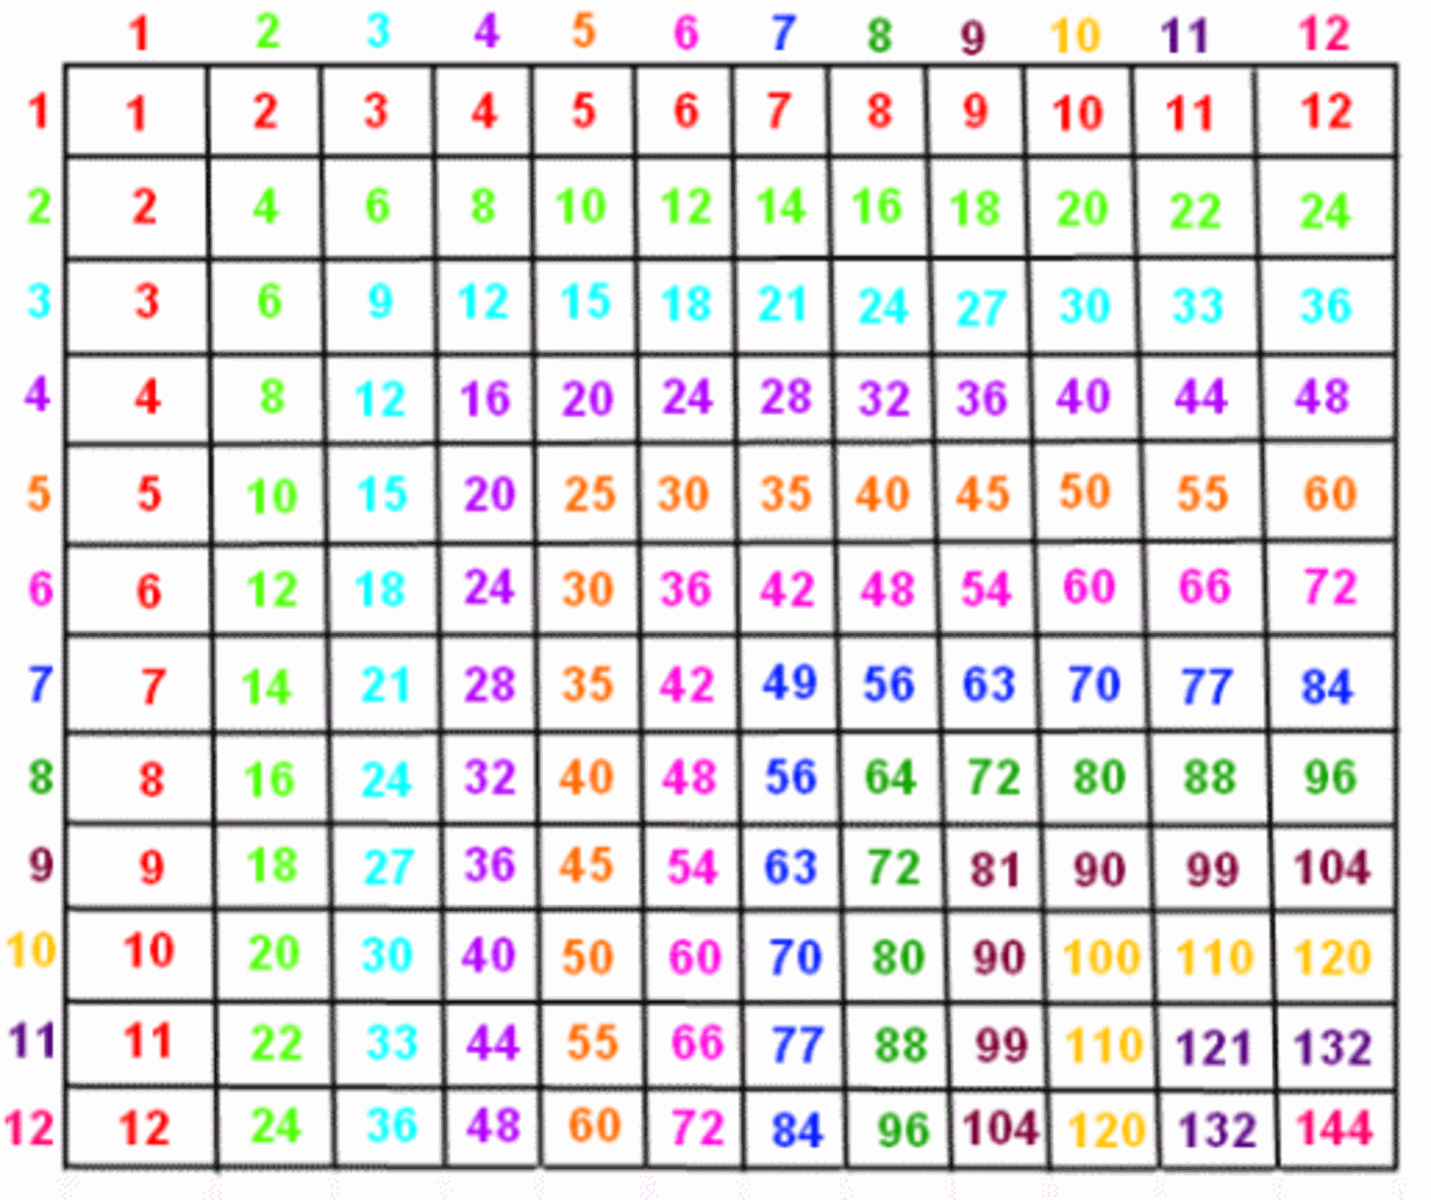 multiplication-tables-1-12